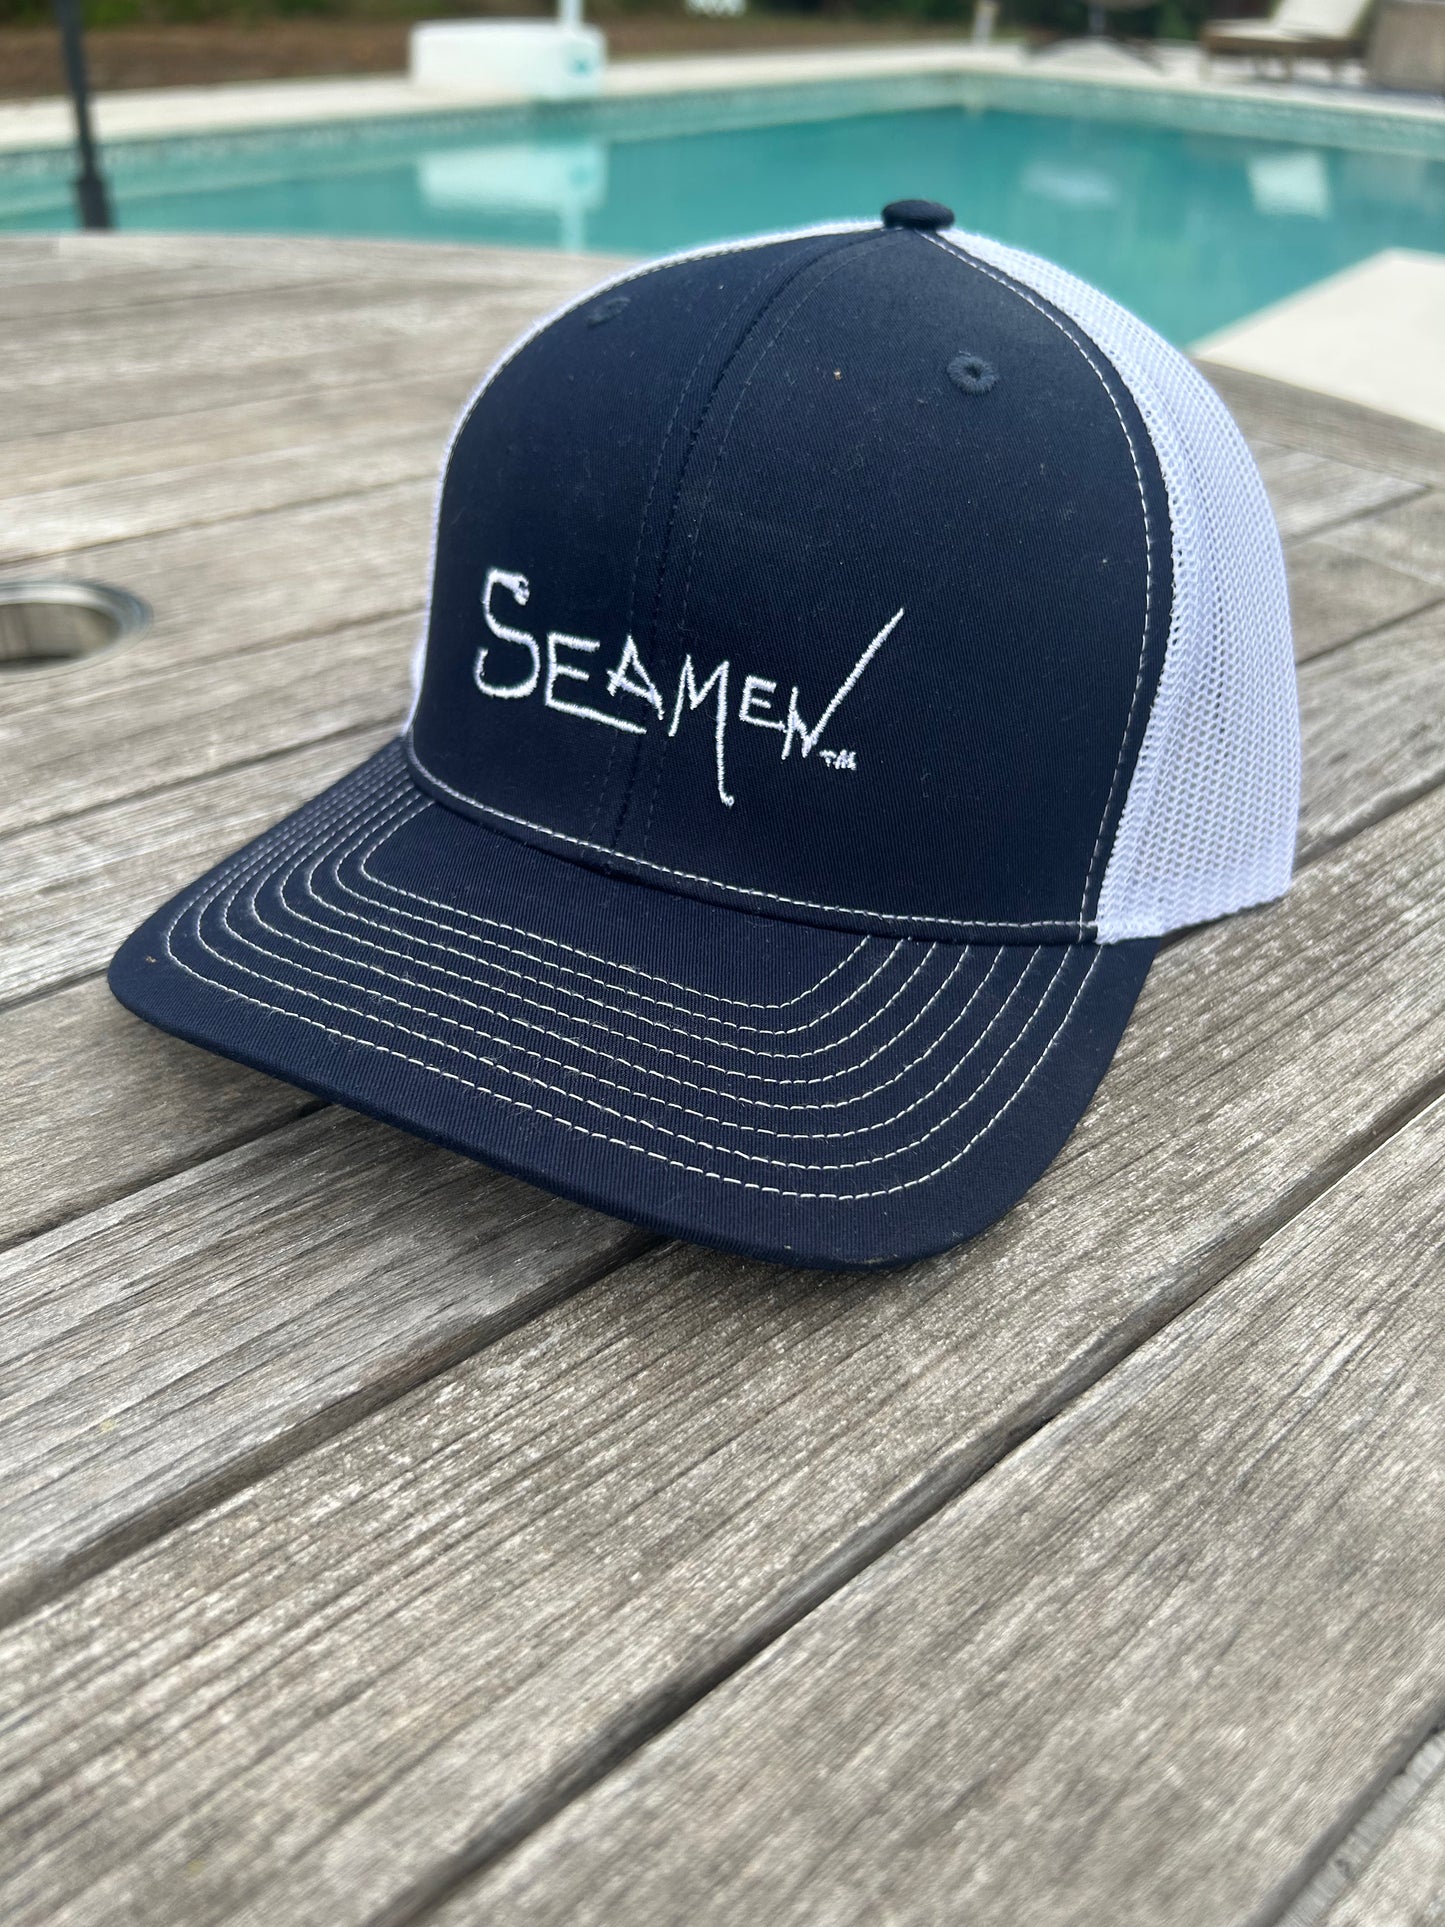 SeaMen Original Trucker Hat